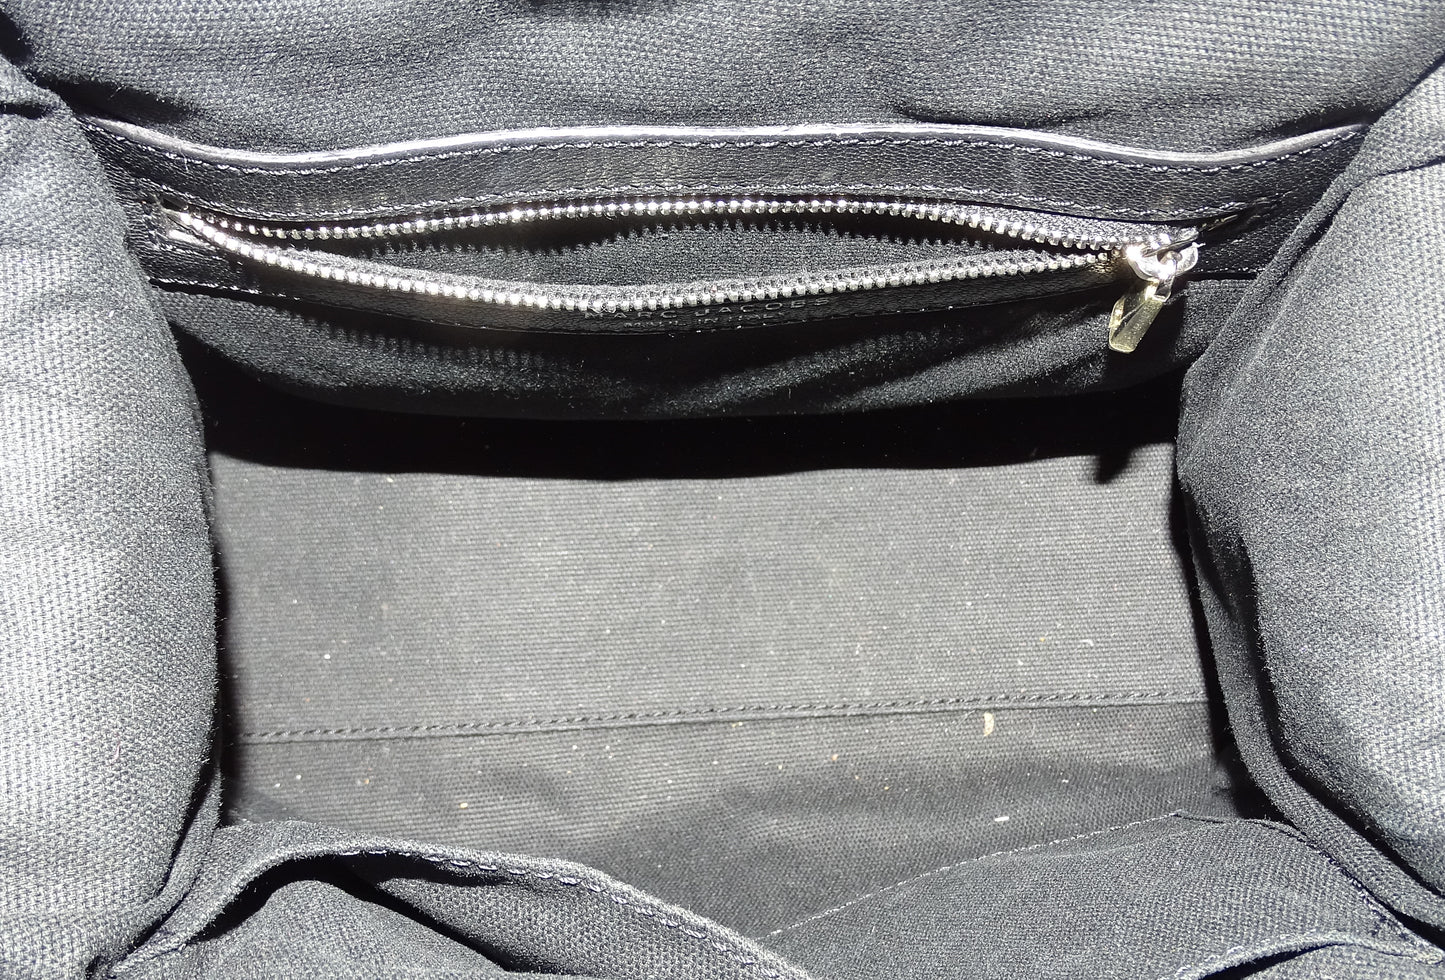 Marc Jacobs Gemma Bowler Bag Black Leather SH